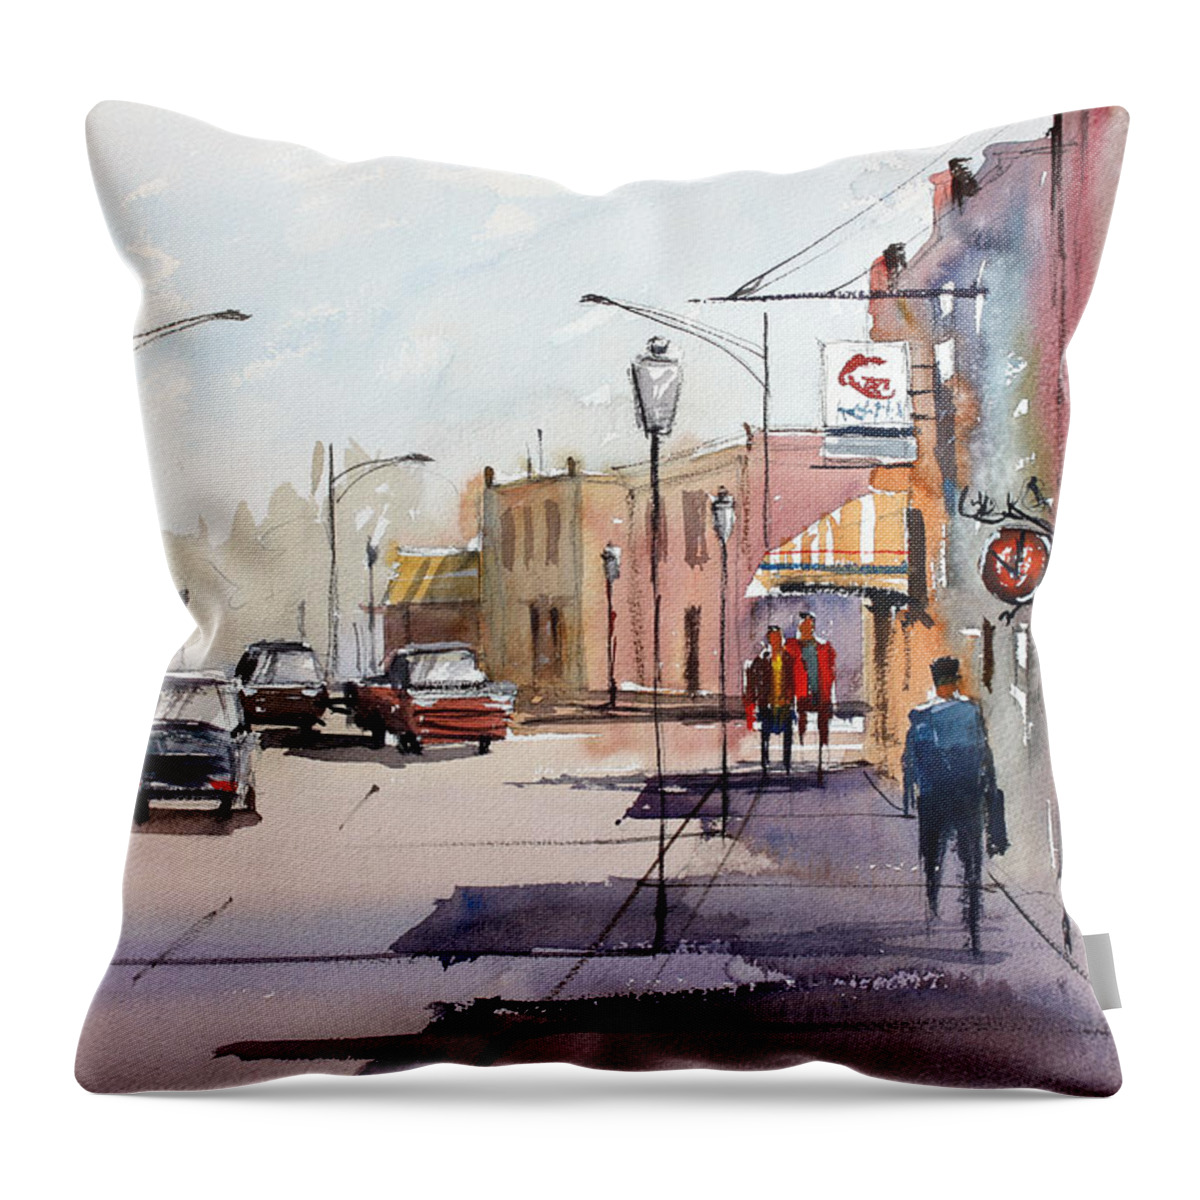 Street Scene Throw Pillow featuring the painting Main Street - Wautoma by Ryan Radke